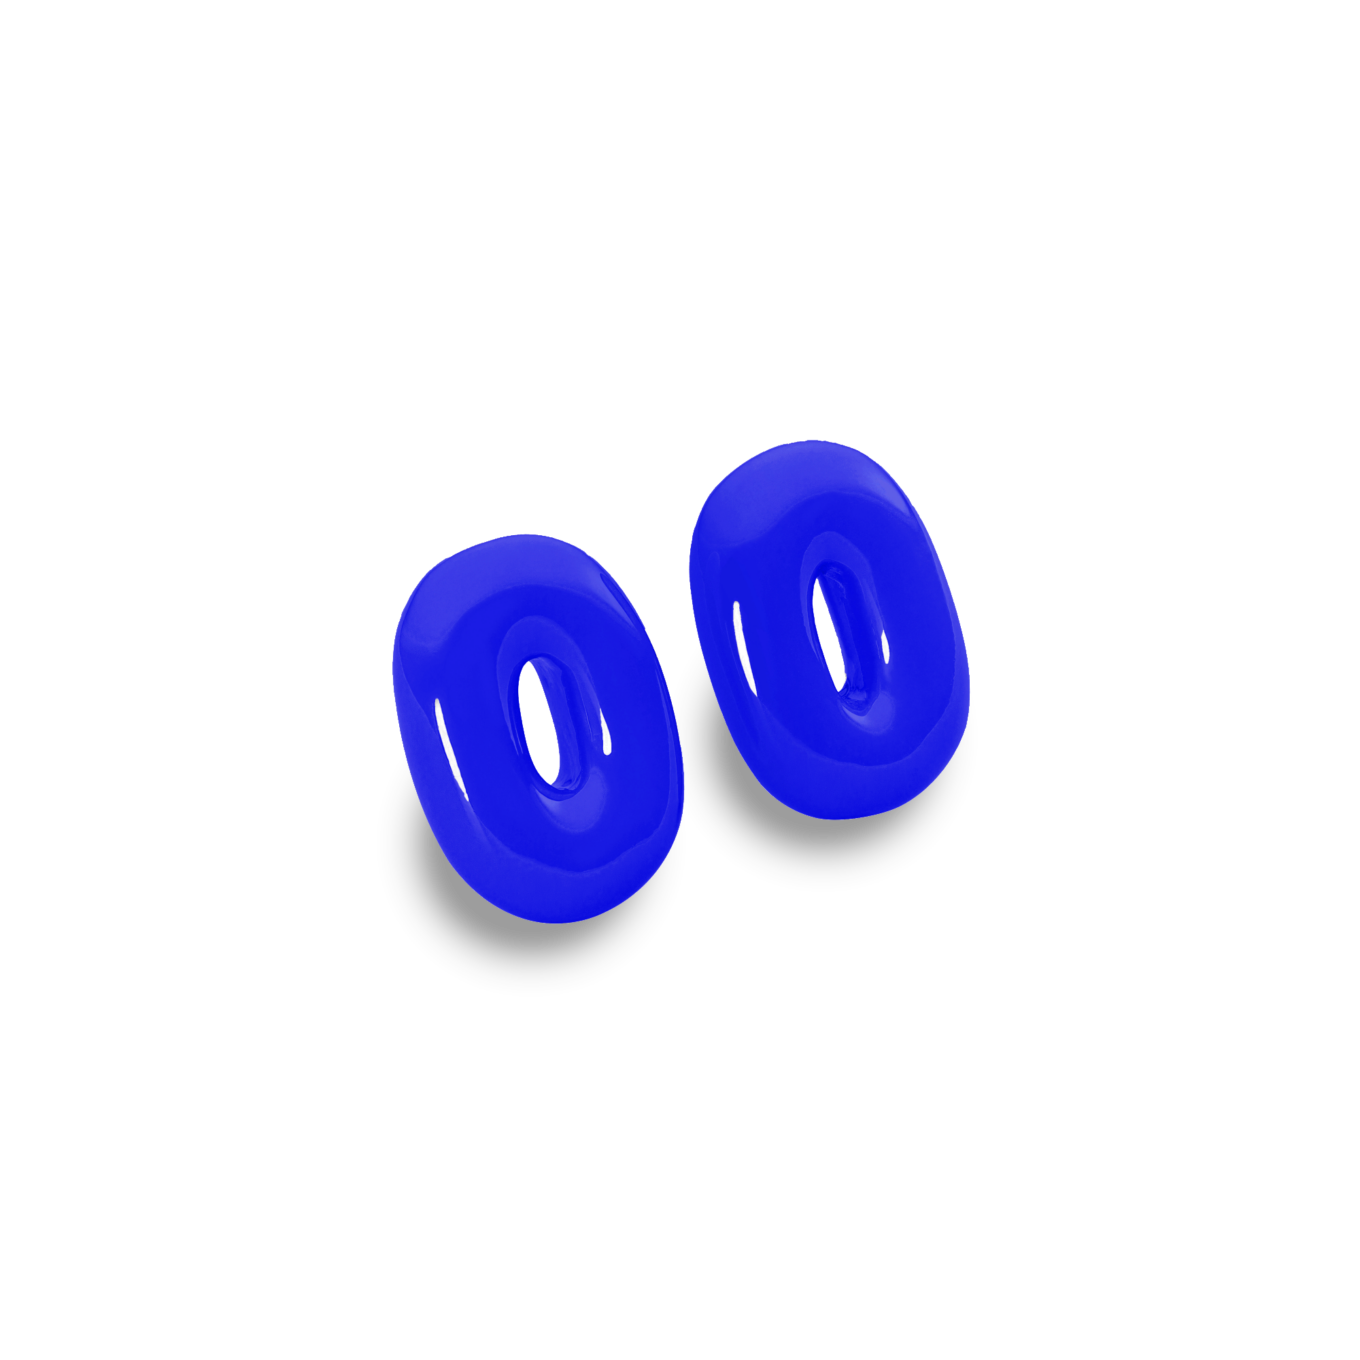 TBOEA06-Torus Earrings - Electric Blue